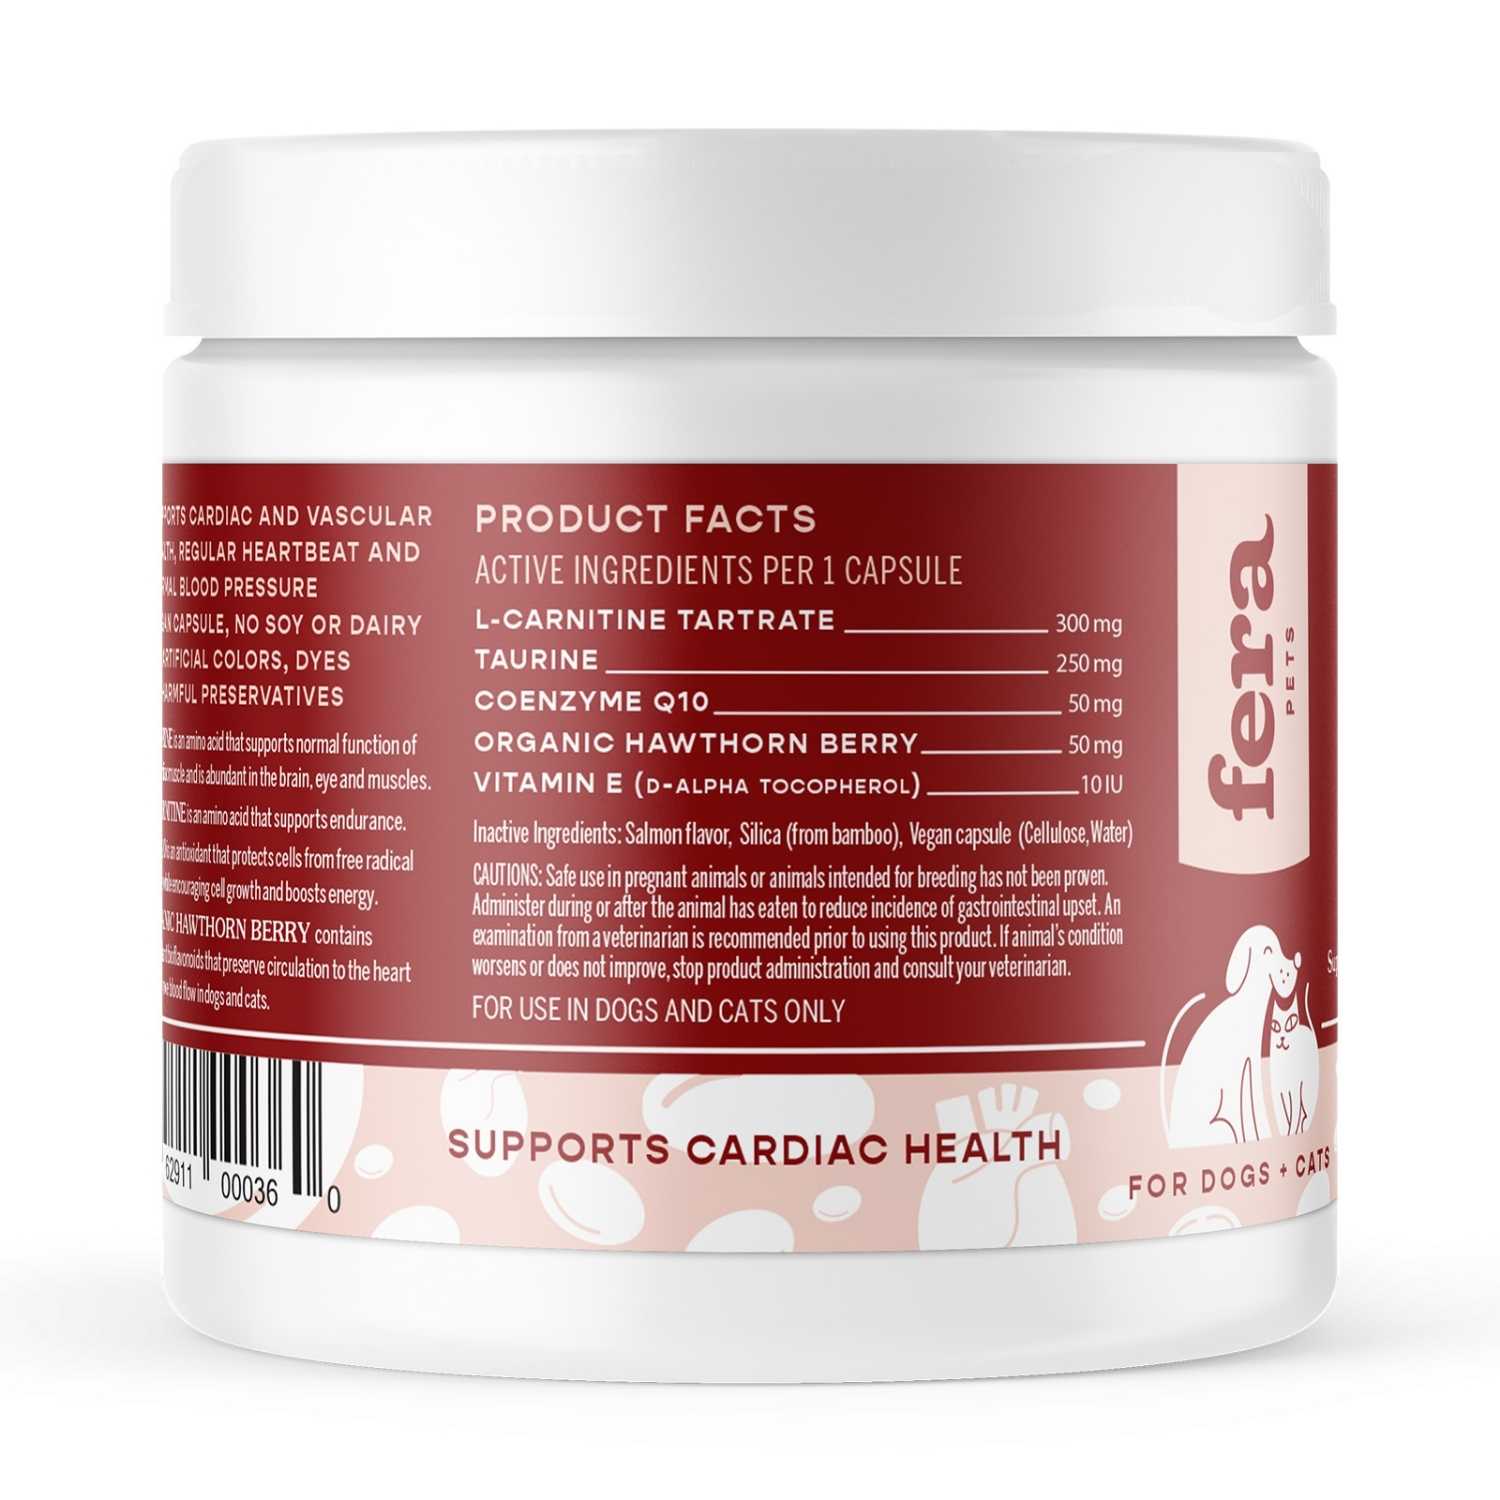 Fera Pet Organics - Cardiac Support Supplement (60 capsules) - Dog & Cat 1.8oz Supplement